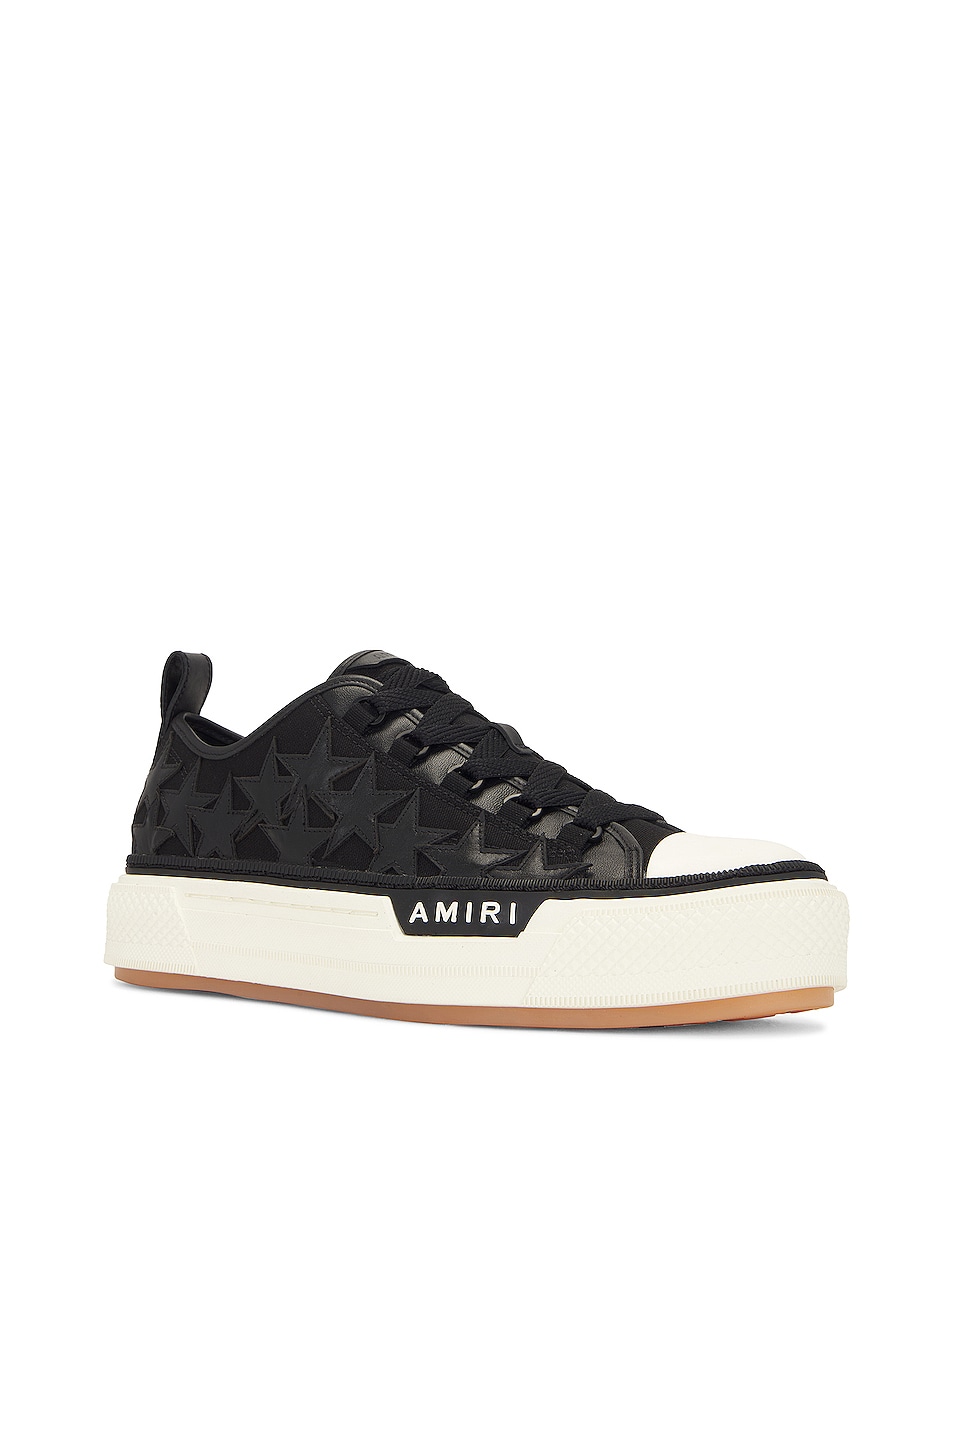 Amiri Stars Court Low Top Sneakers in Black & White | FWRD